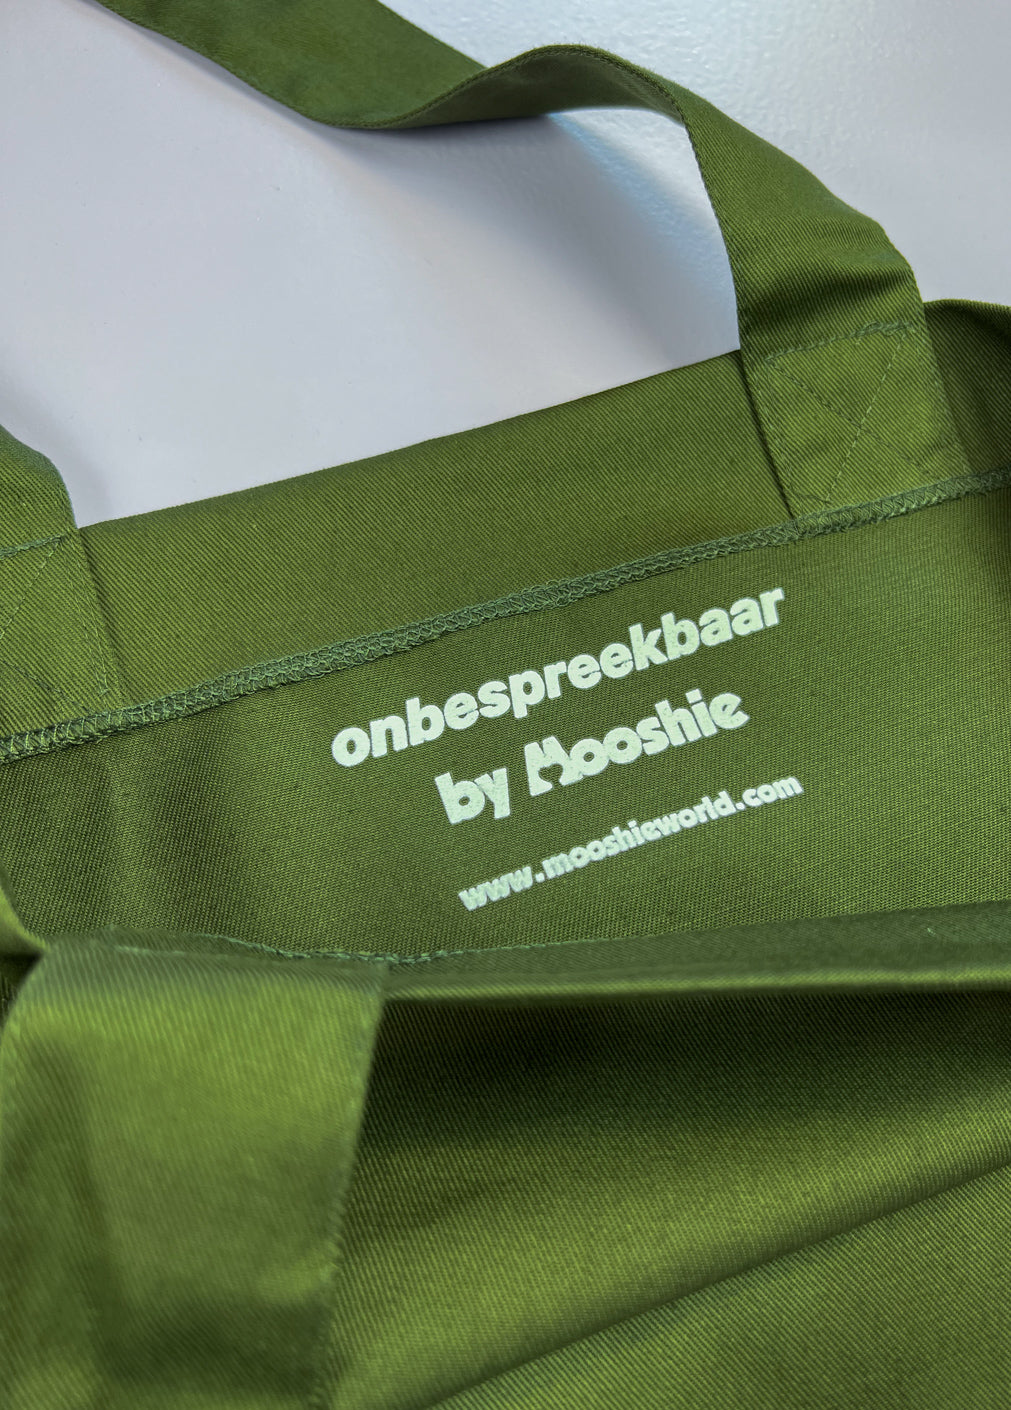 Military Green Tote Bag | 100% Fairtrade